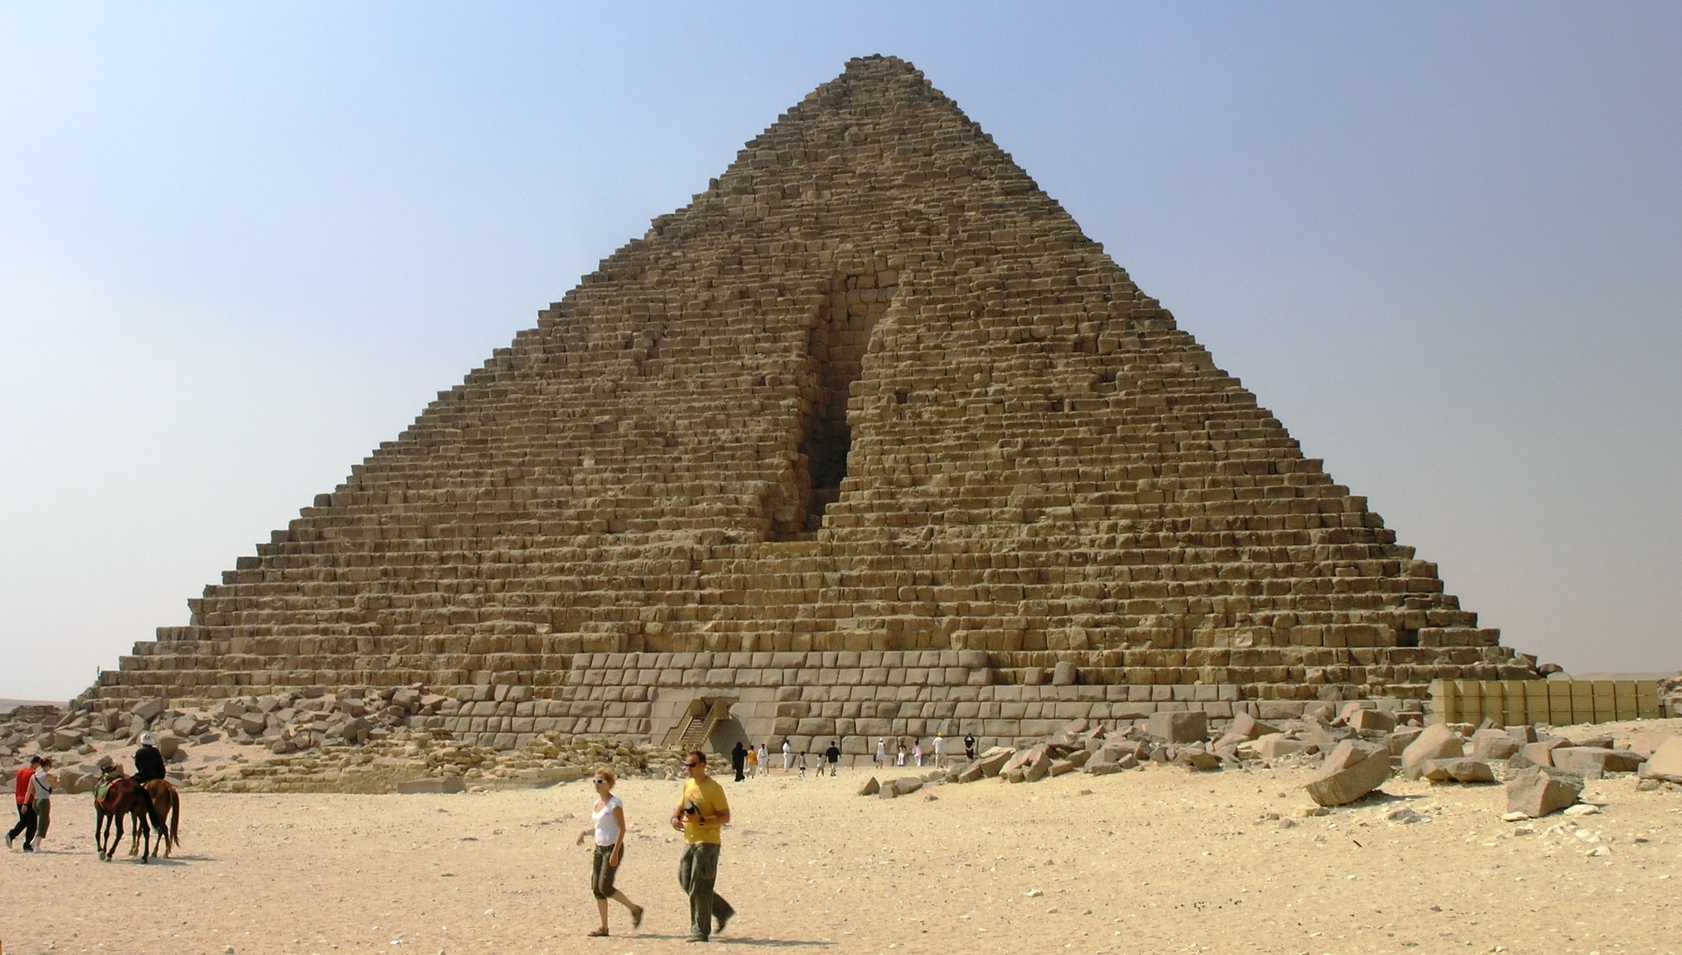 Menkaure (Mikerinos) piramidine verilen zarar.